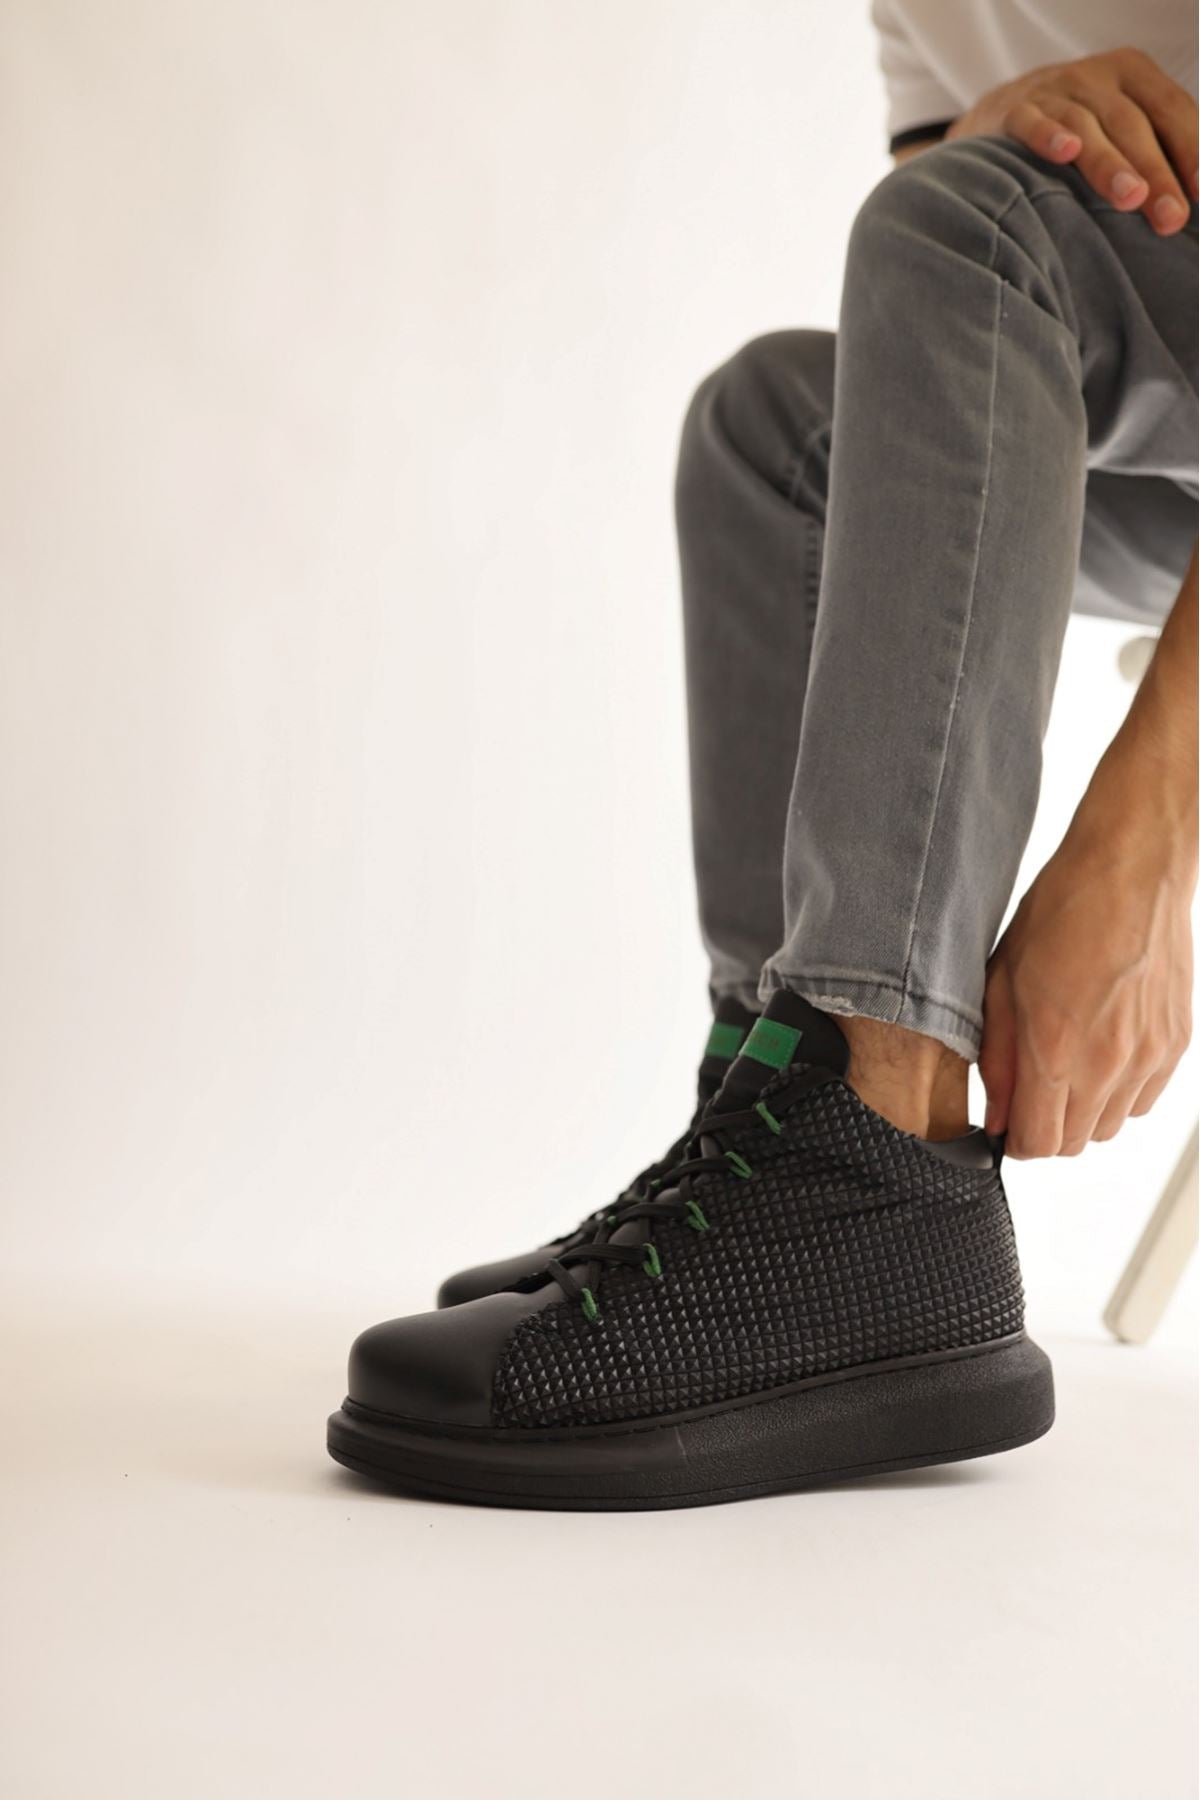 CH 111 Garni ST BLACK / GREEN men's sneakers shoes - STREETMODE ™